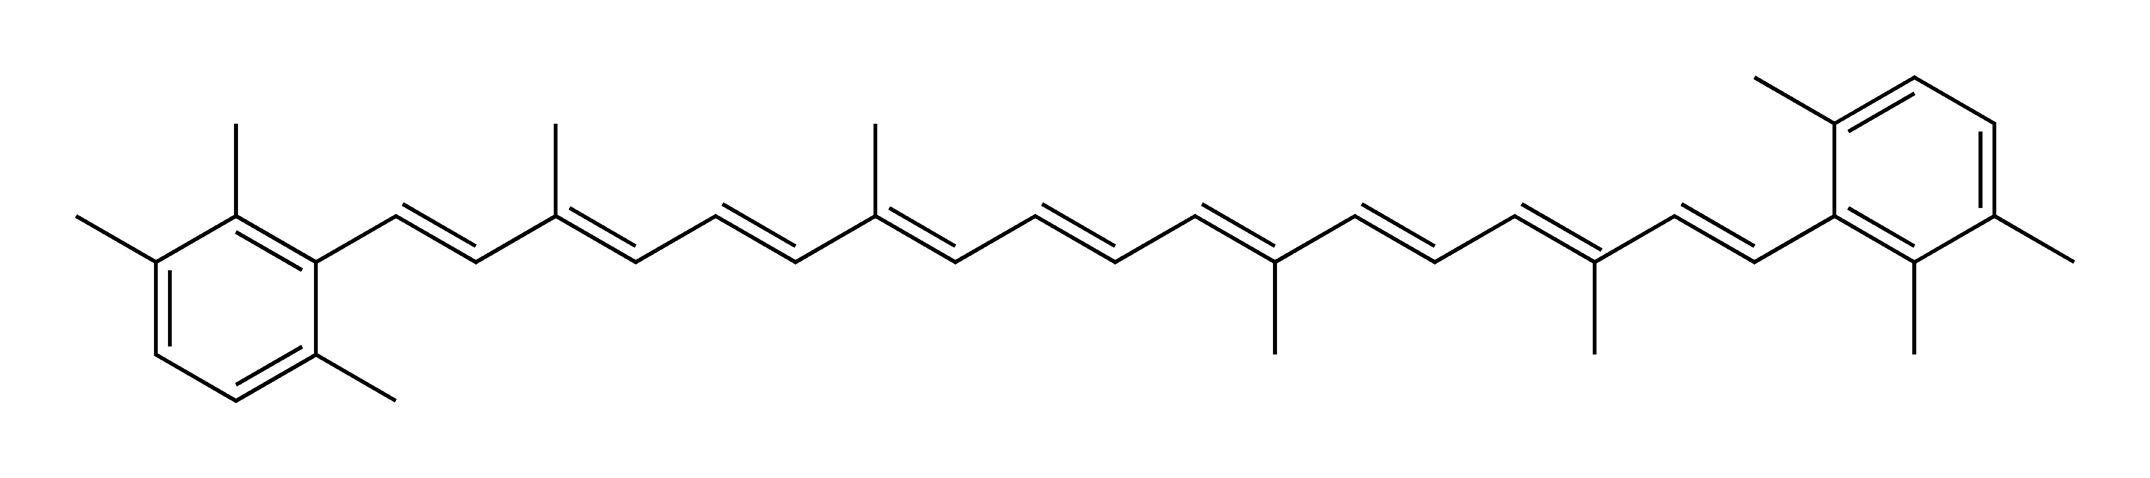 Isorenieratene, a carotenoid